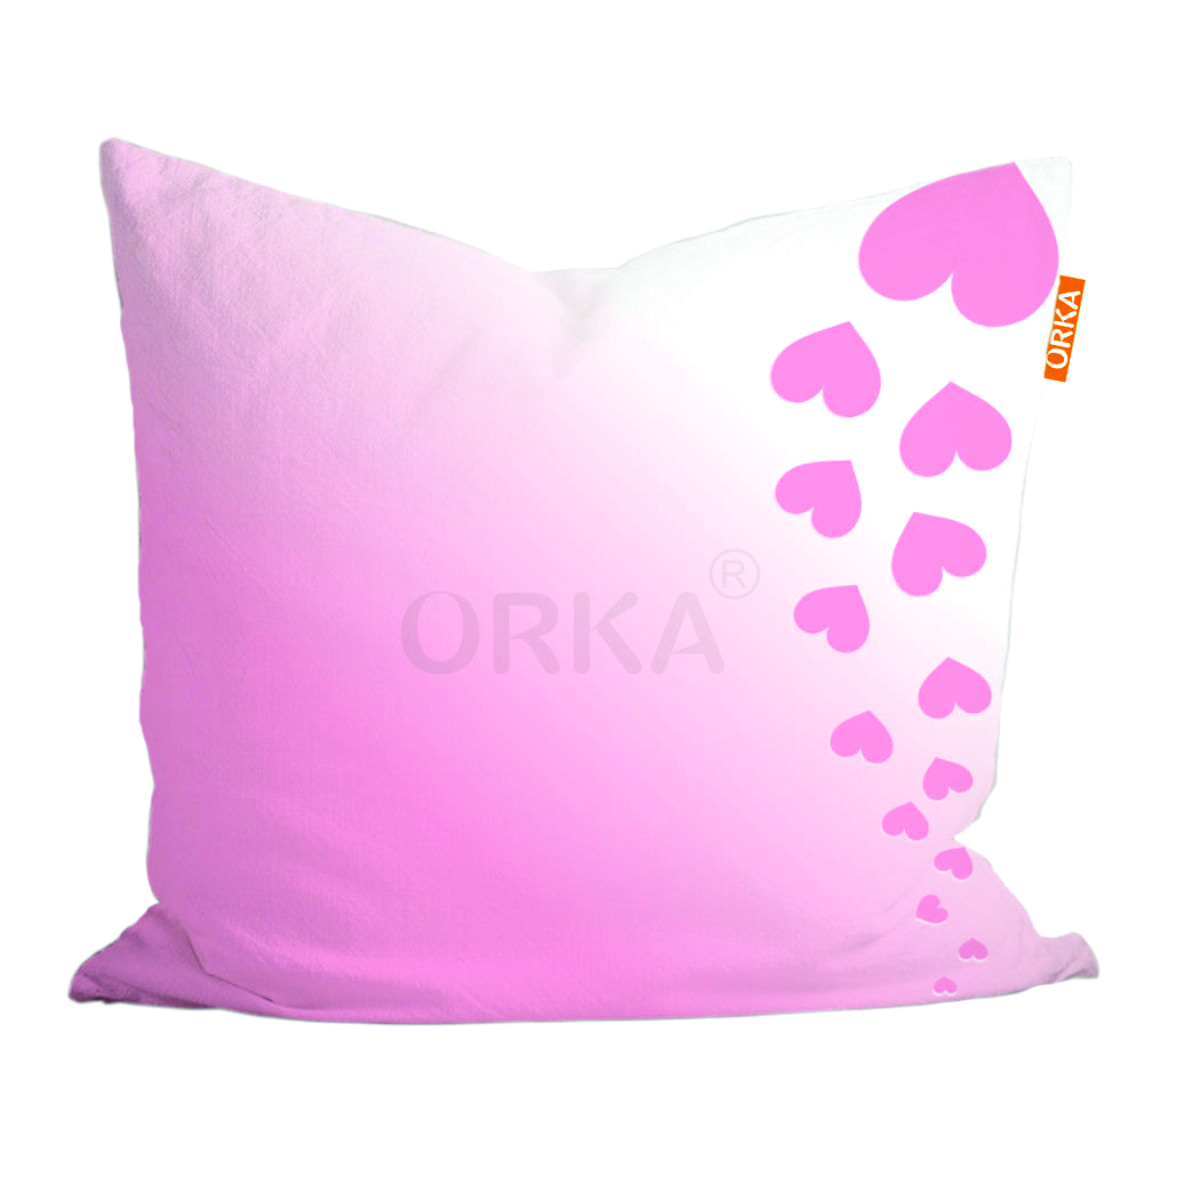 ORKA Valentine Theme Digital Printed Cushion - Pink White   